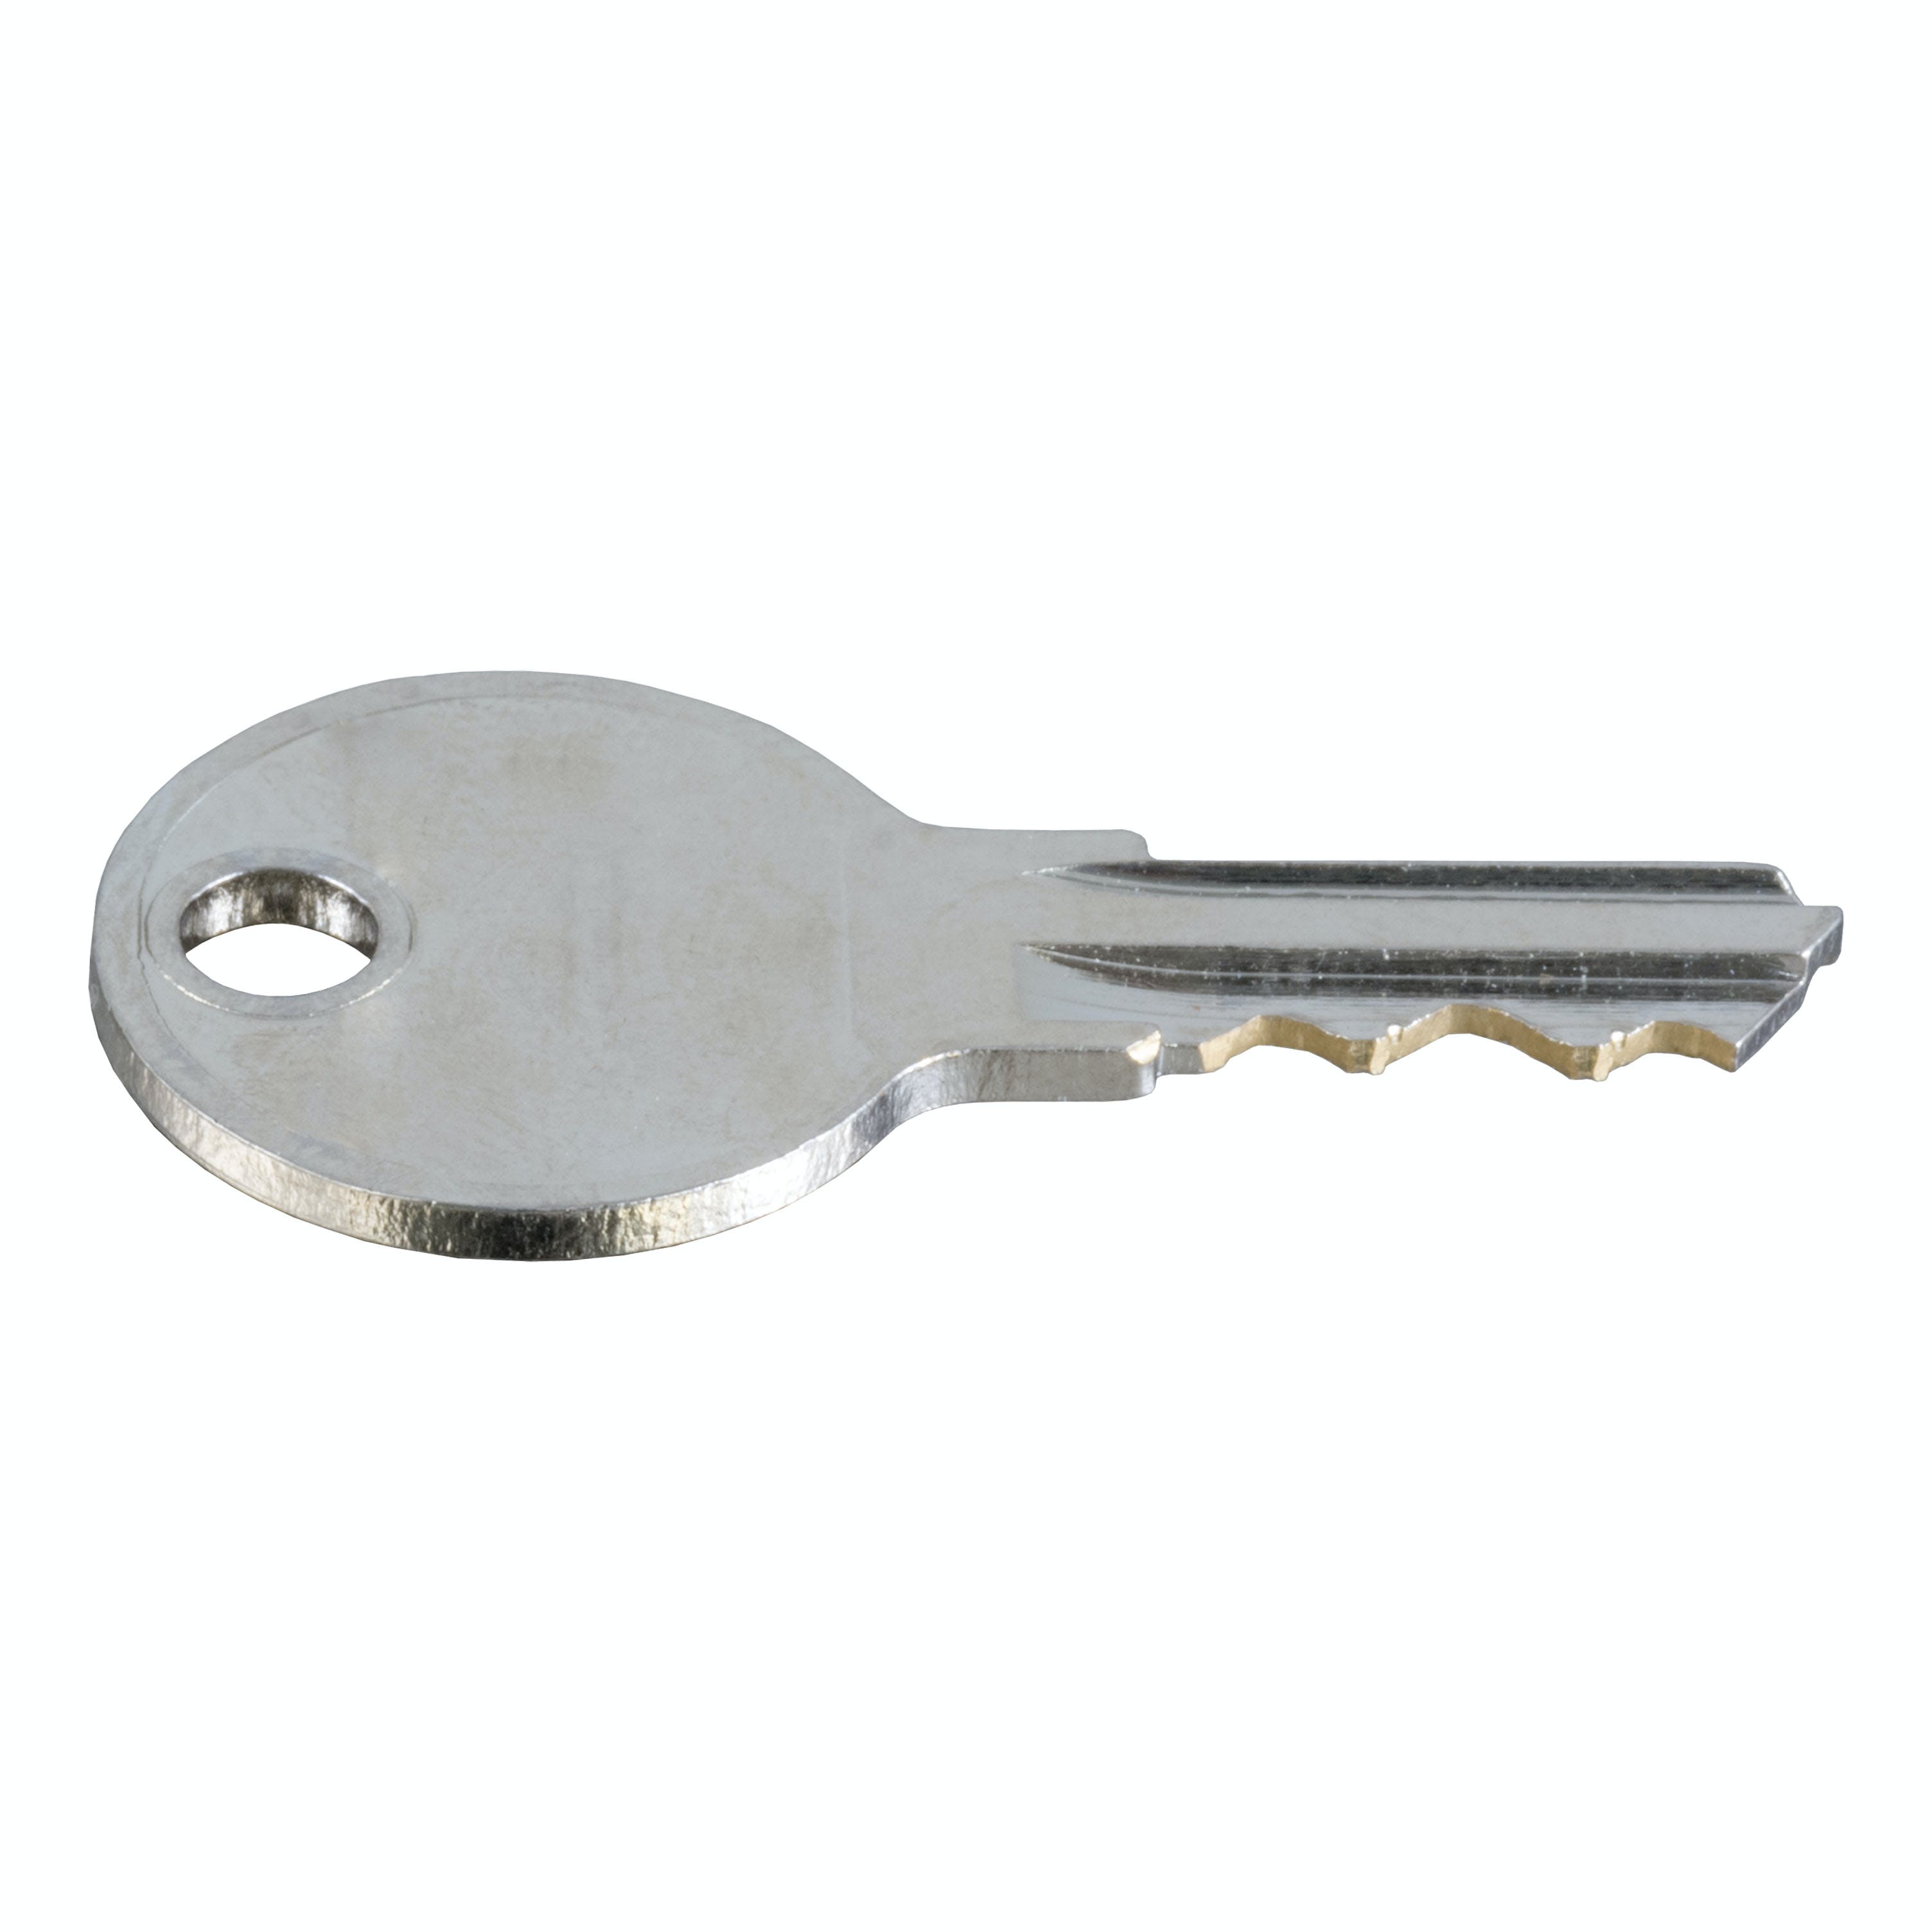 UWS KEYCH505 Replacement Keys